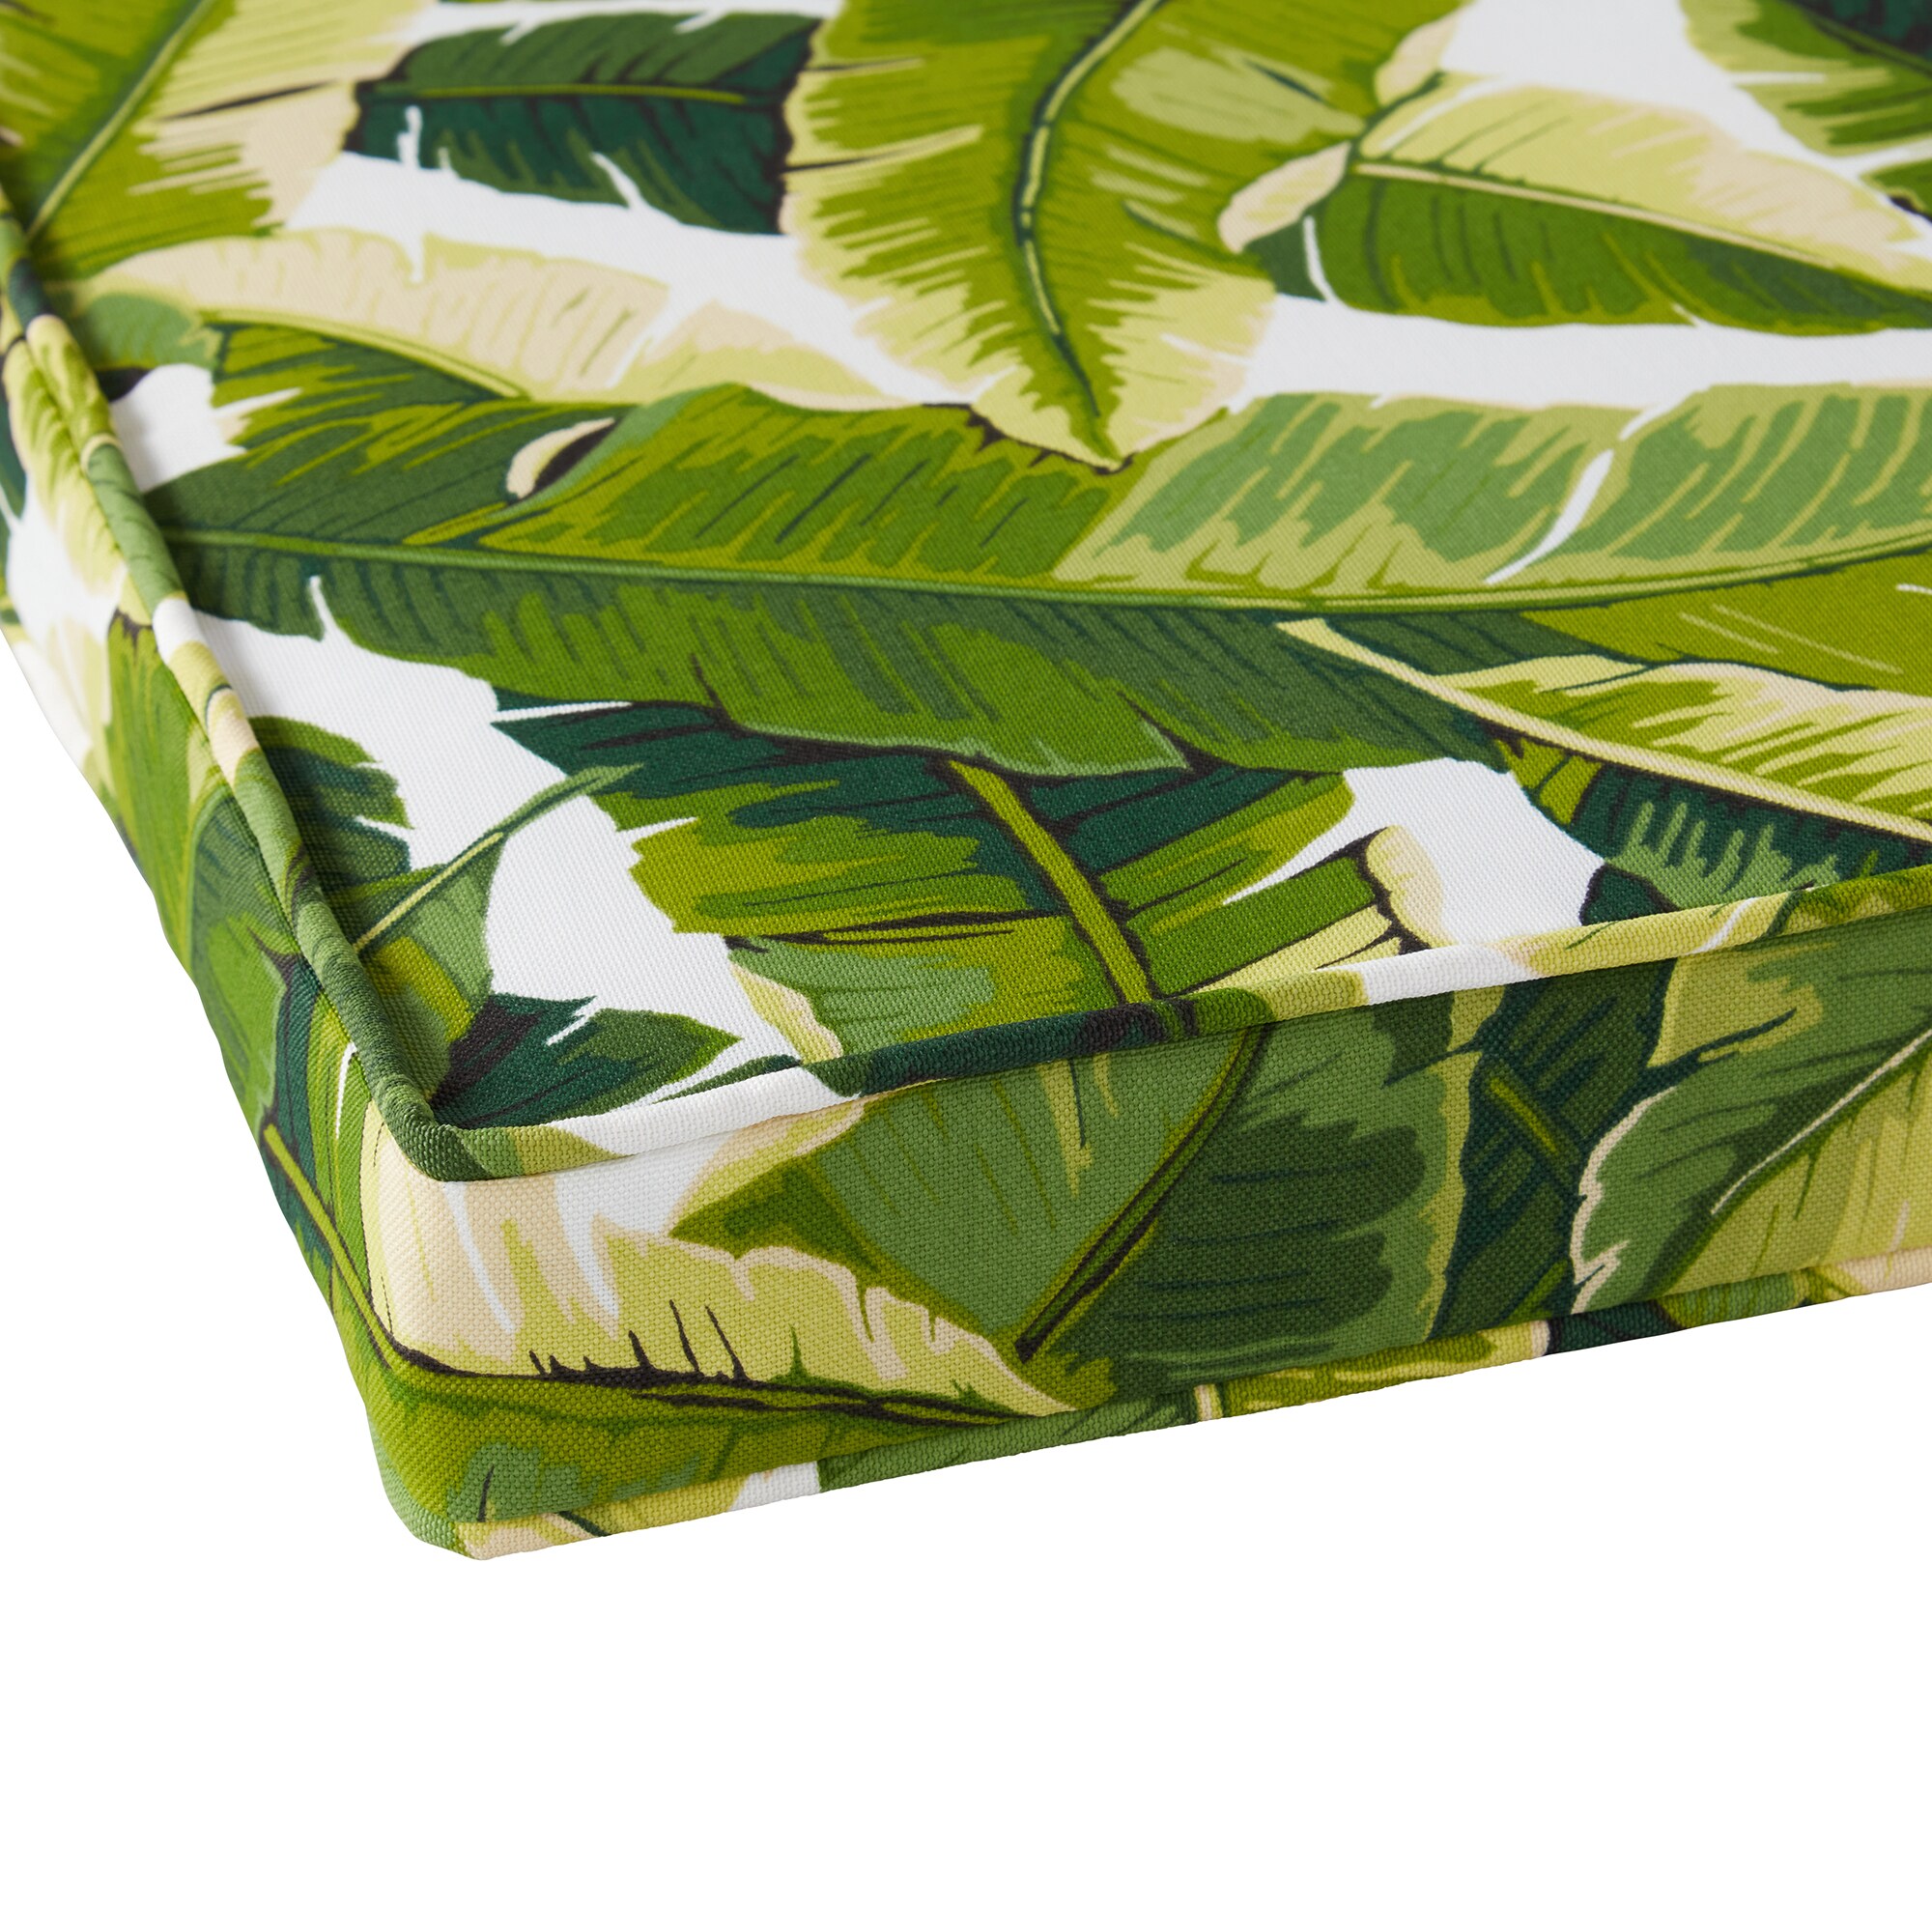 Memory Foam Chair Pad Seat Cushion Green Leaf of Tropical Palm